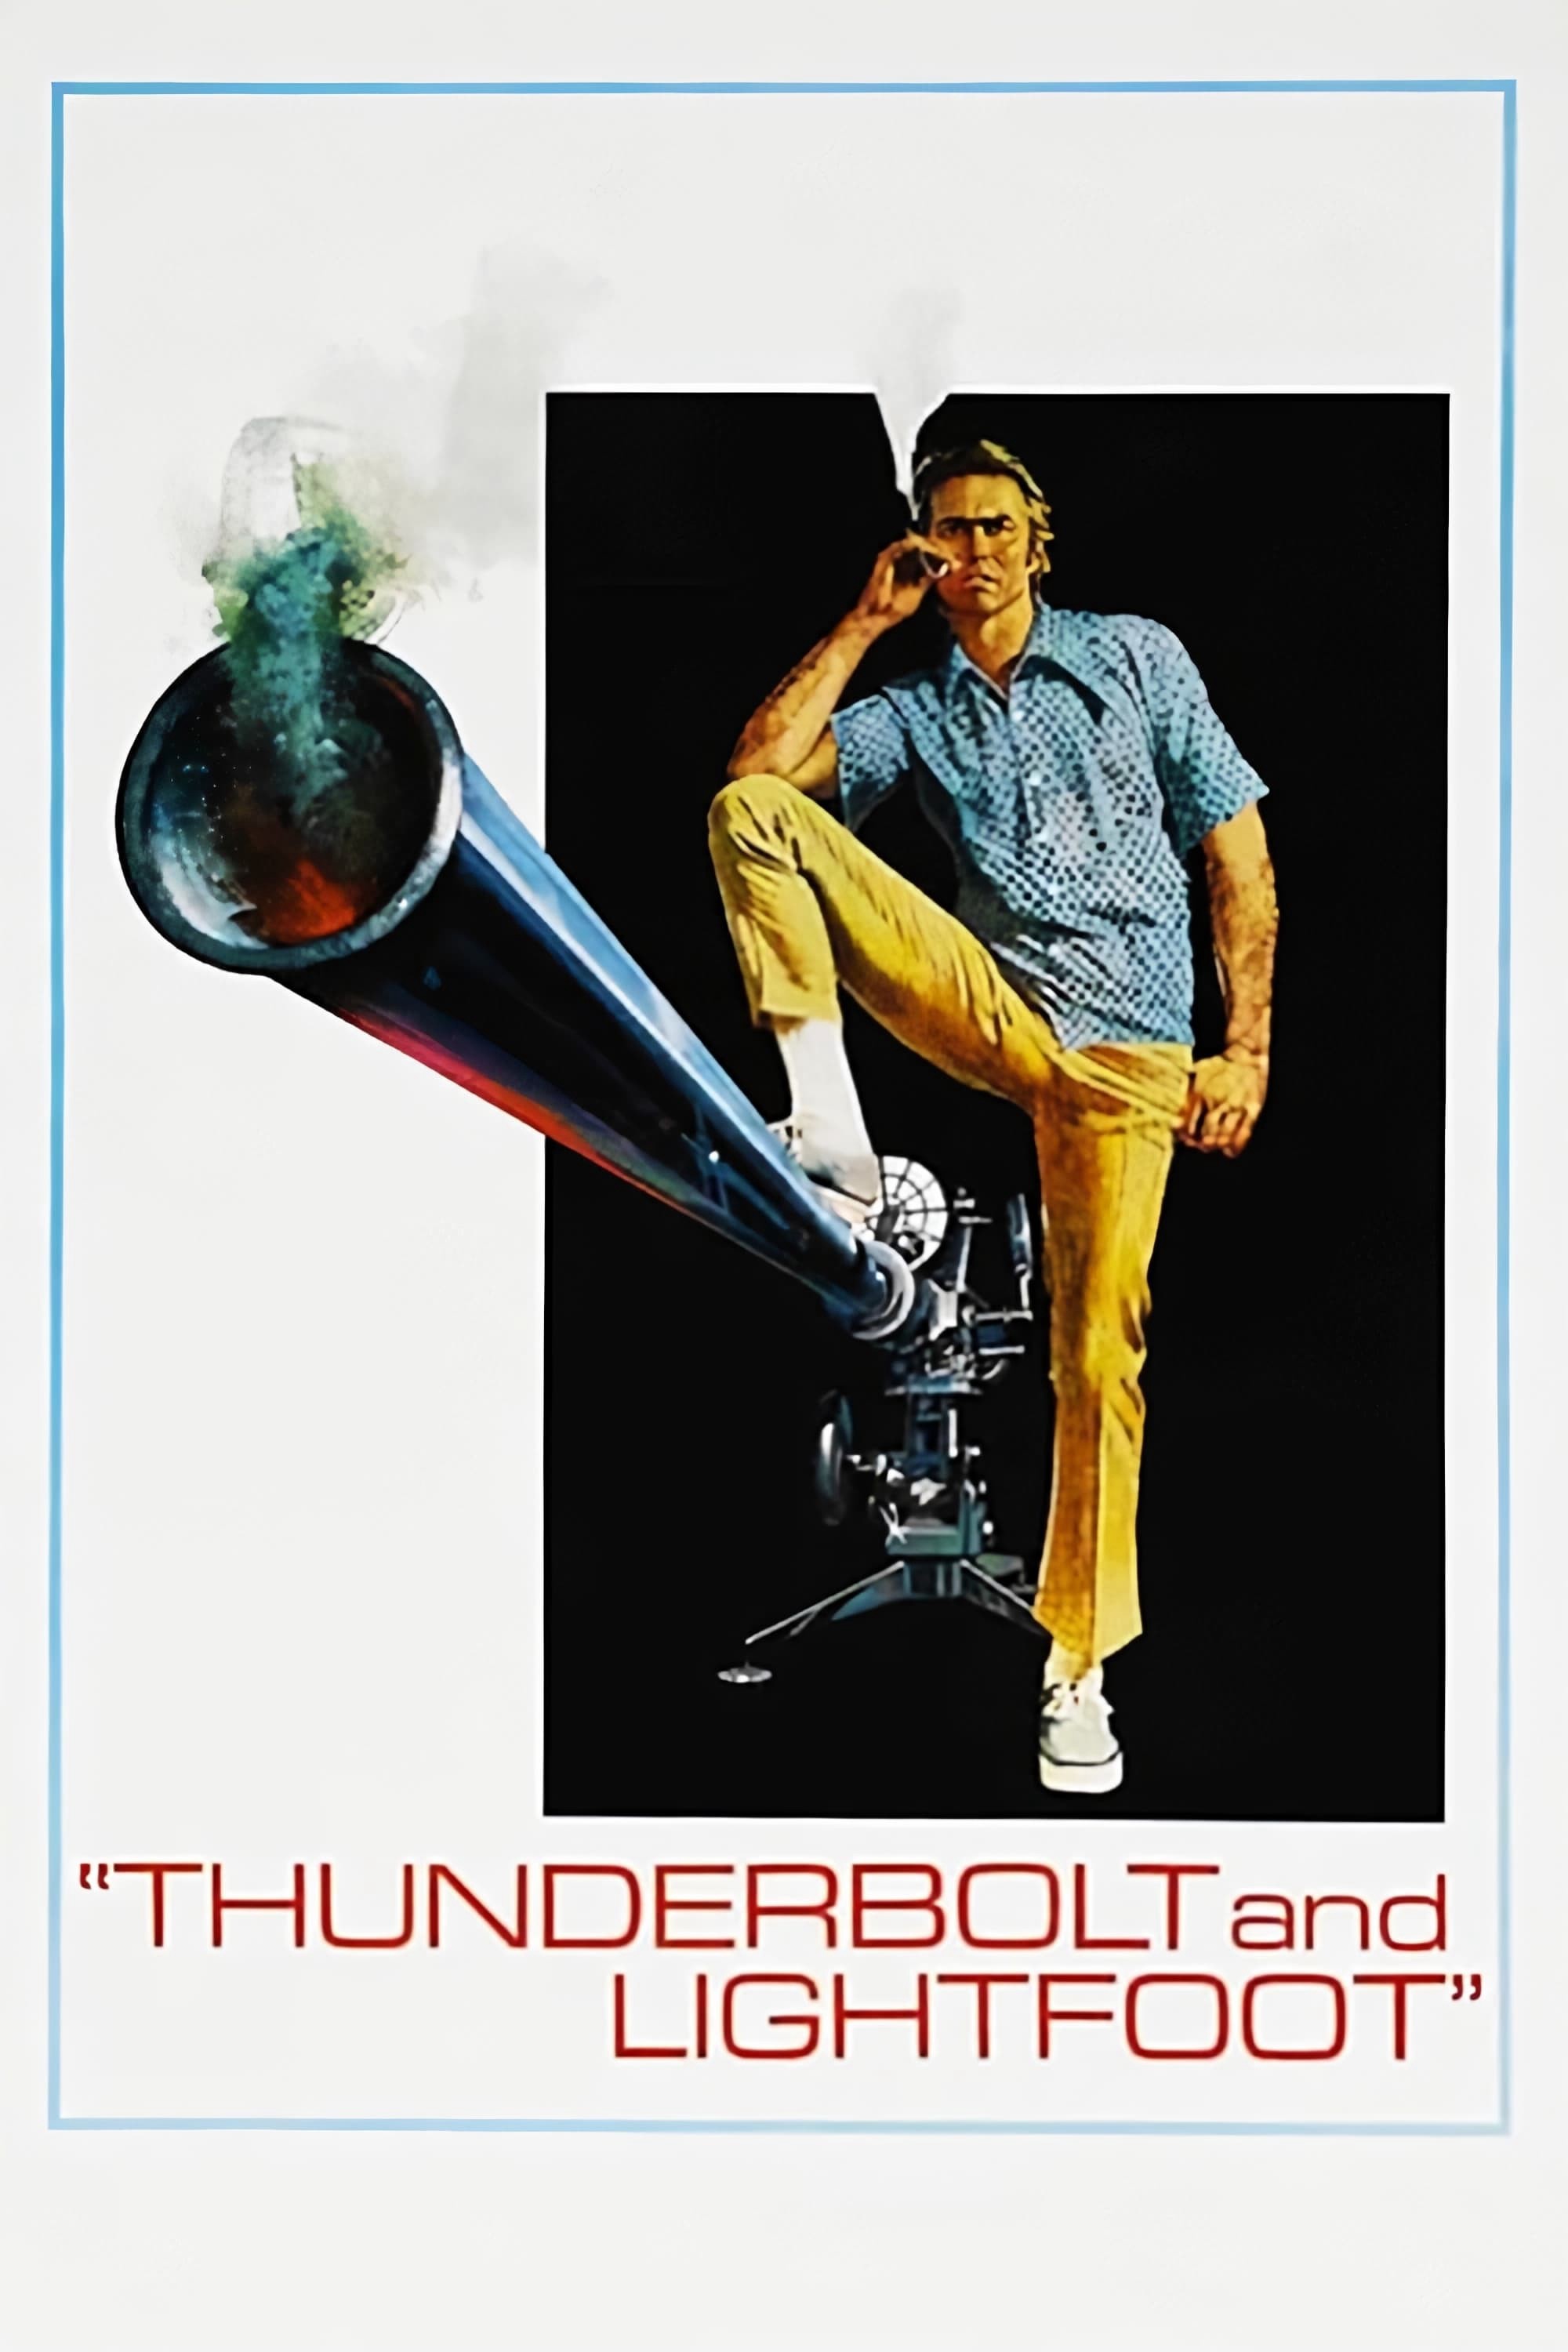 Thunderbolt and Lightfoot - Thunderbolt and Lightfoot (1974)